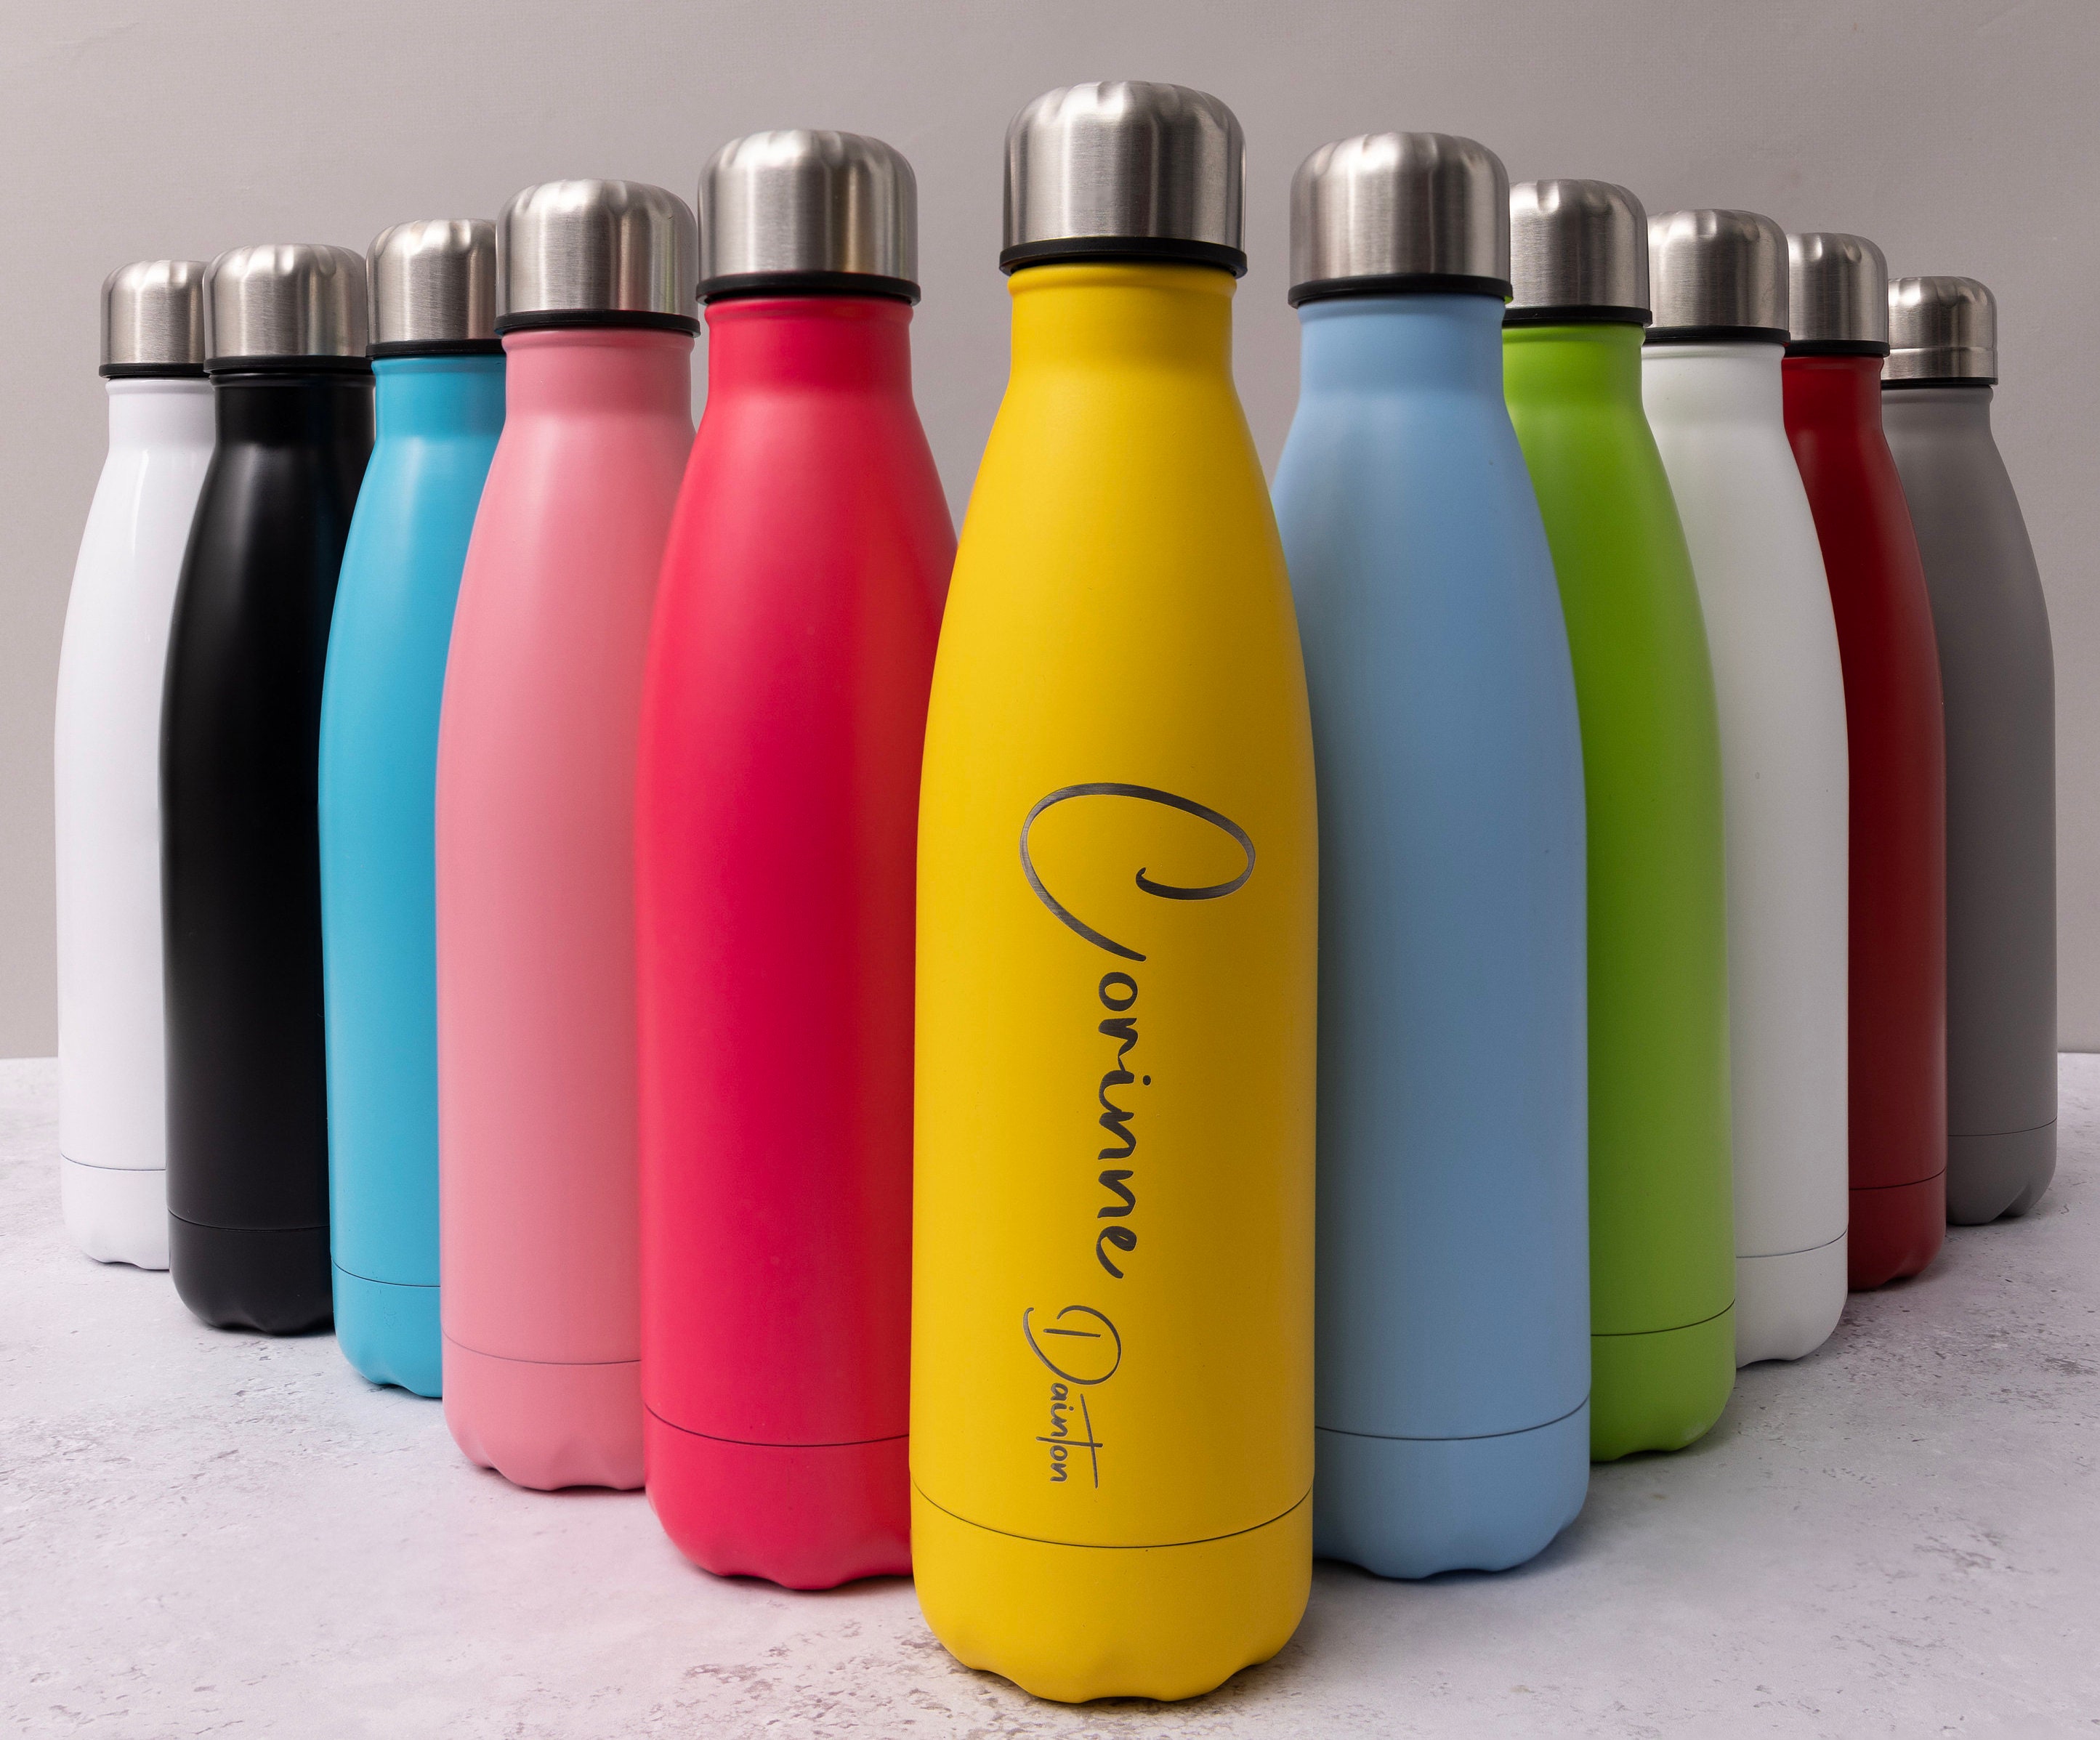 Gatorade Premium Gx Stainless Steel 32 oz Water Bottle - For Pods - Bright  Pink